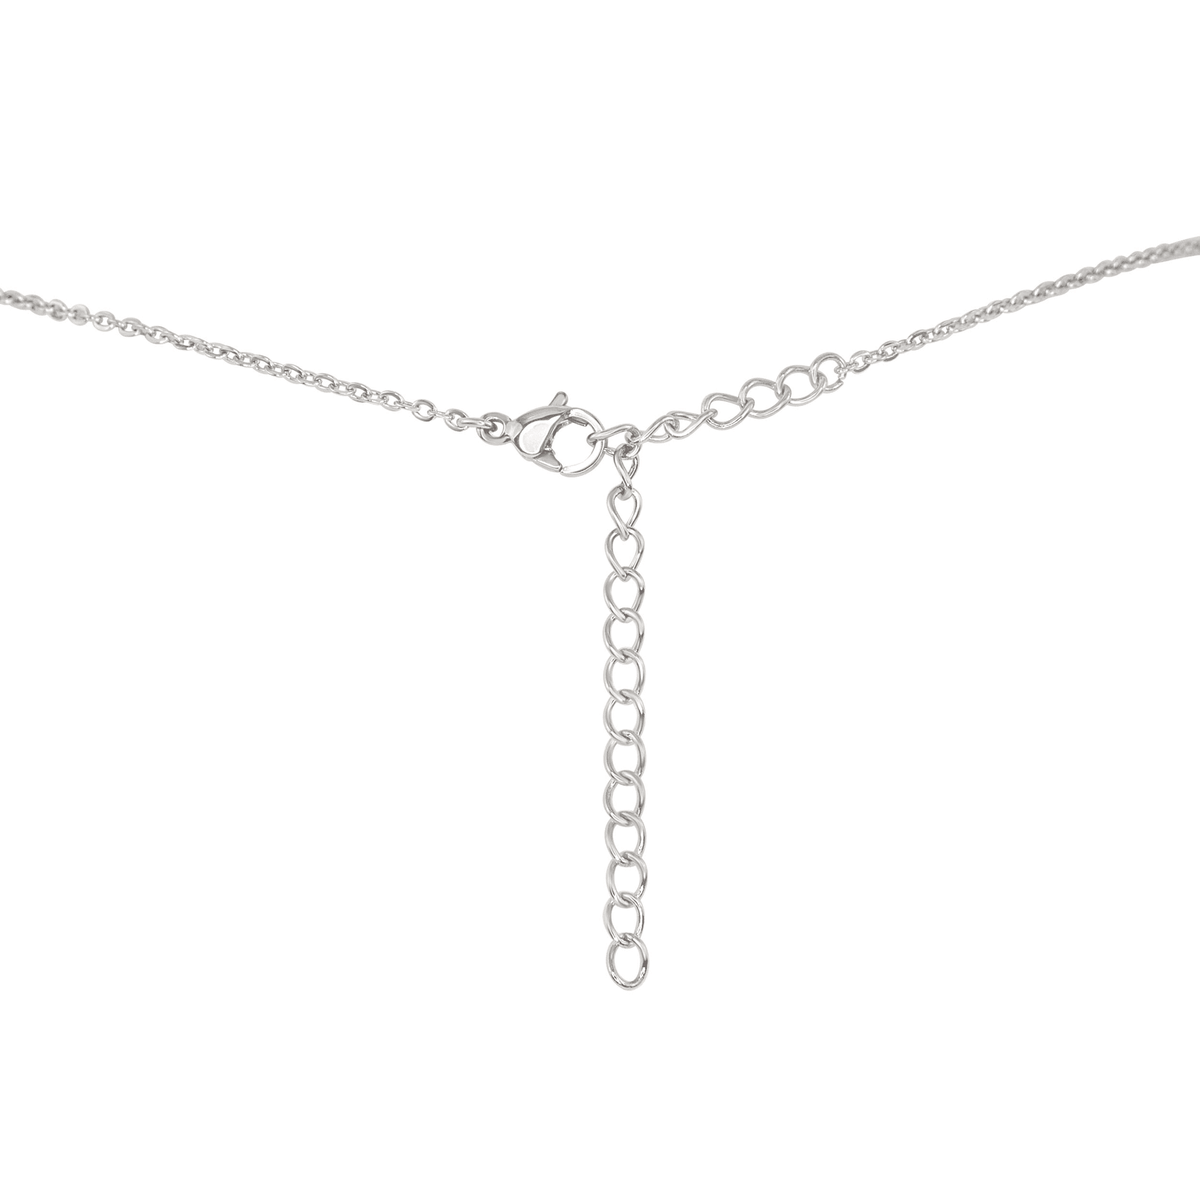 Ruby Boho Lariat Necklace - Ruby Boho Lariat Necklace - Sterling Silver - Luna Tide Handmade Crystal Jewellery